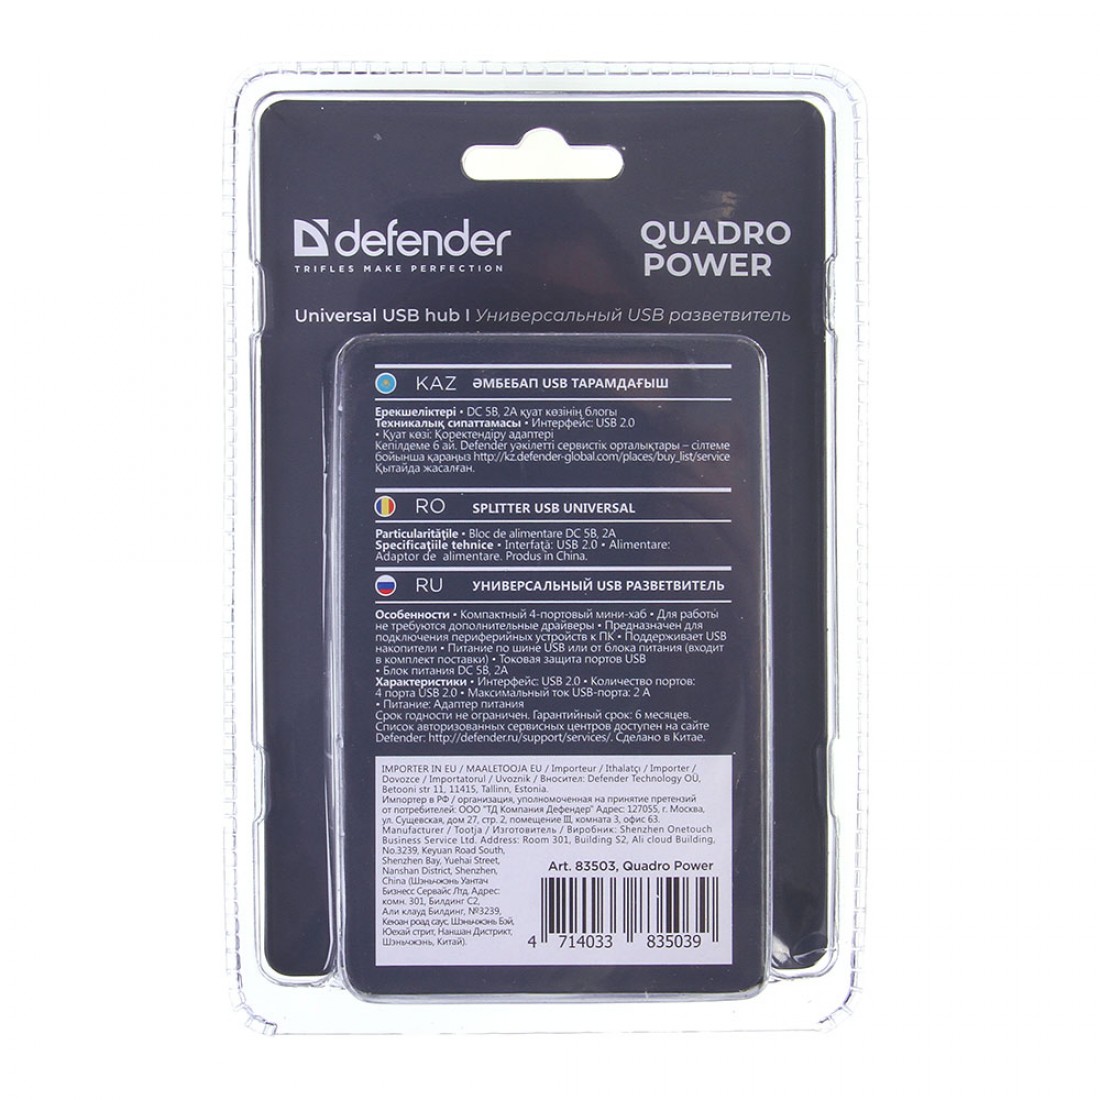 Defender quadro. USB-разветвитель Defender Quadro Power. Универсальный хаб USB разветвитель Defender Quadro Power, 4 порта. USB Defender Quadro Power (83503). Hub Defender Quadro Power USB2.0, 4 порта (1/100).